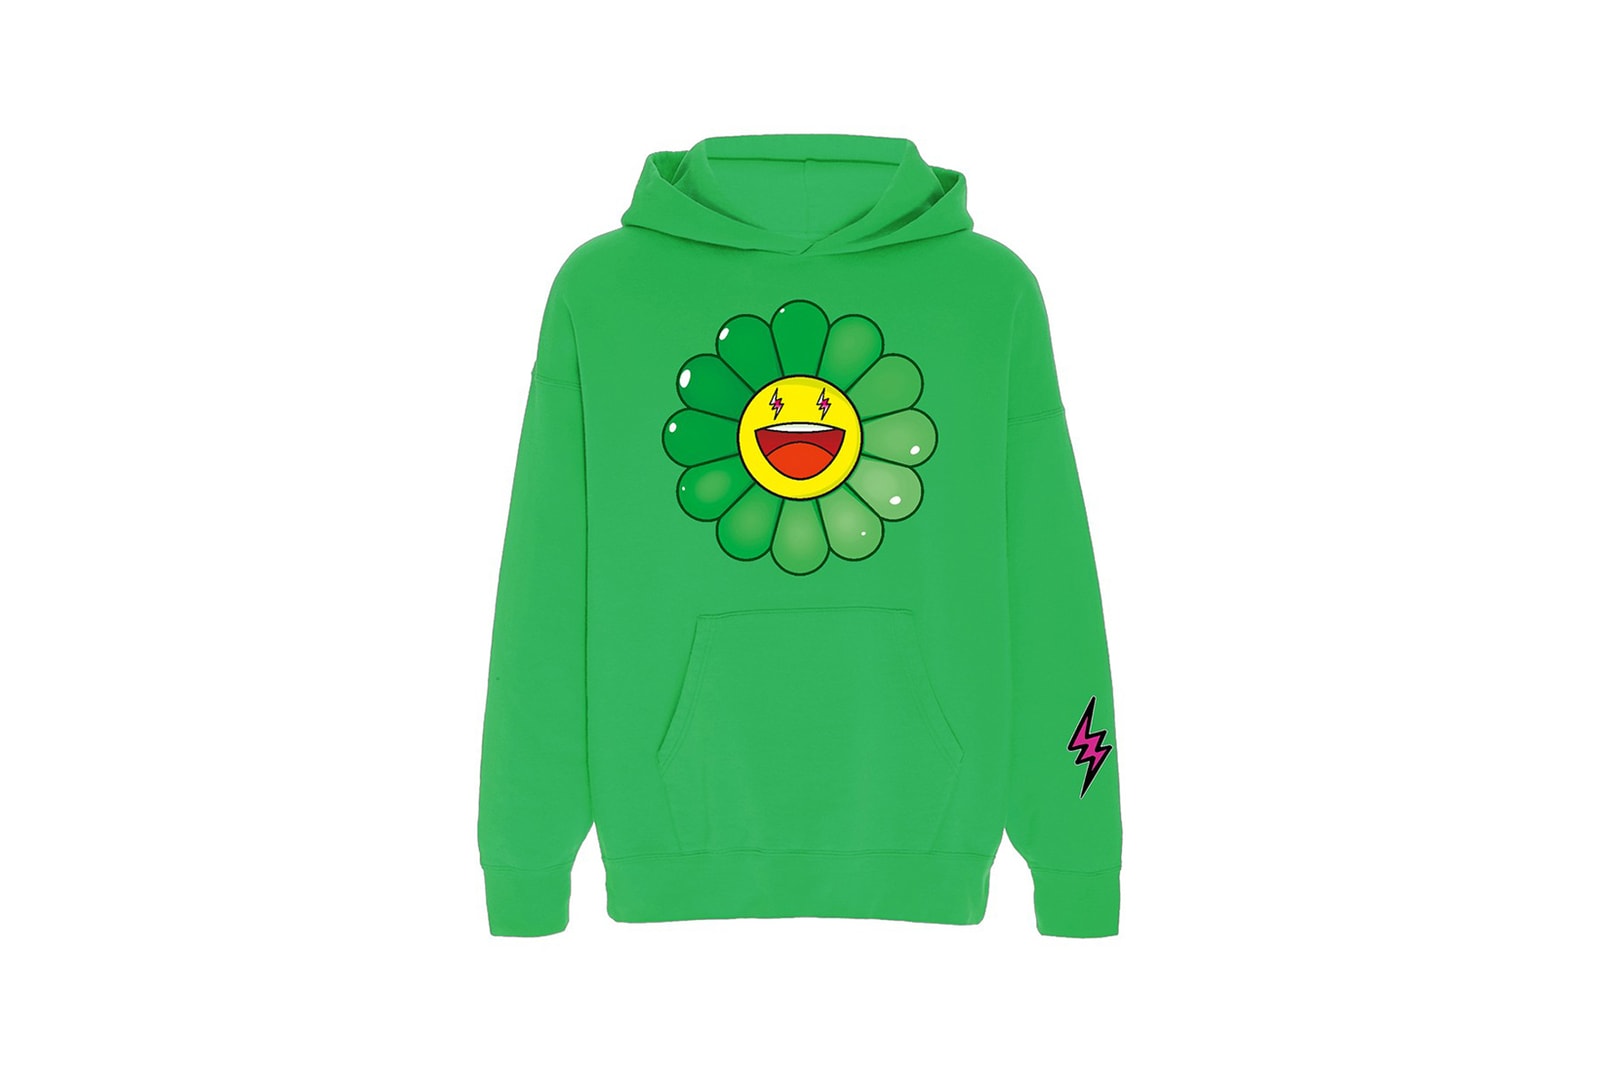 takashi murakami j balvin collaboration drop 4 hoodies t shirts sweatshirts colores album green black flower